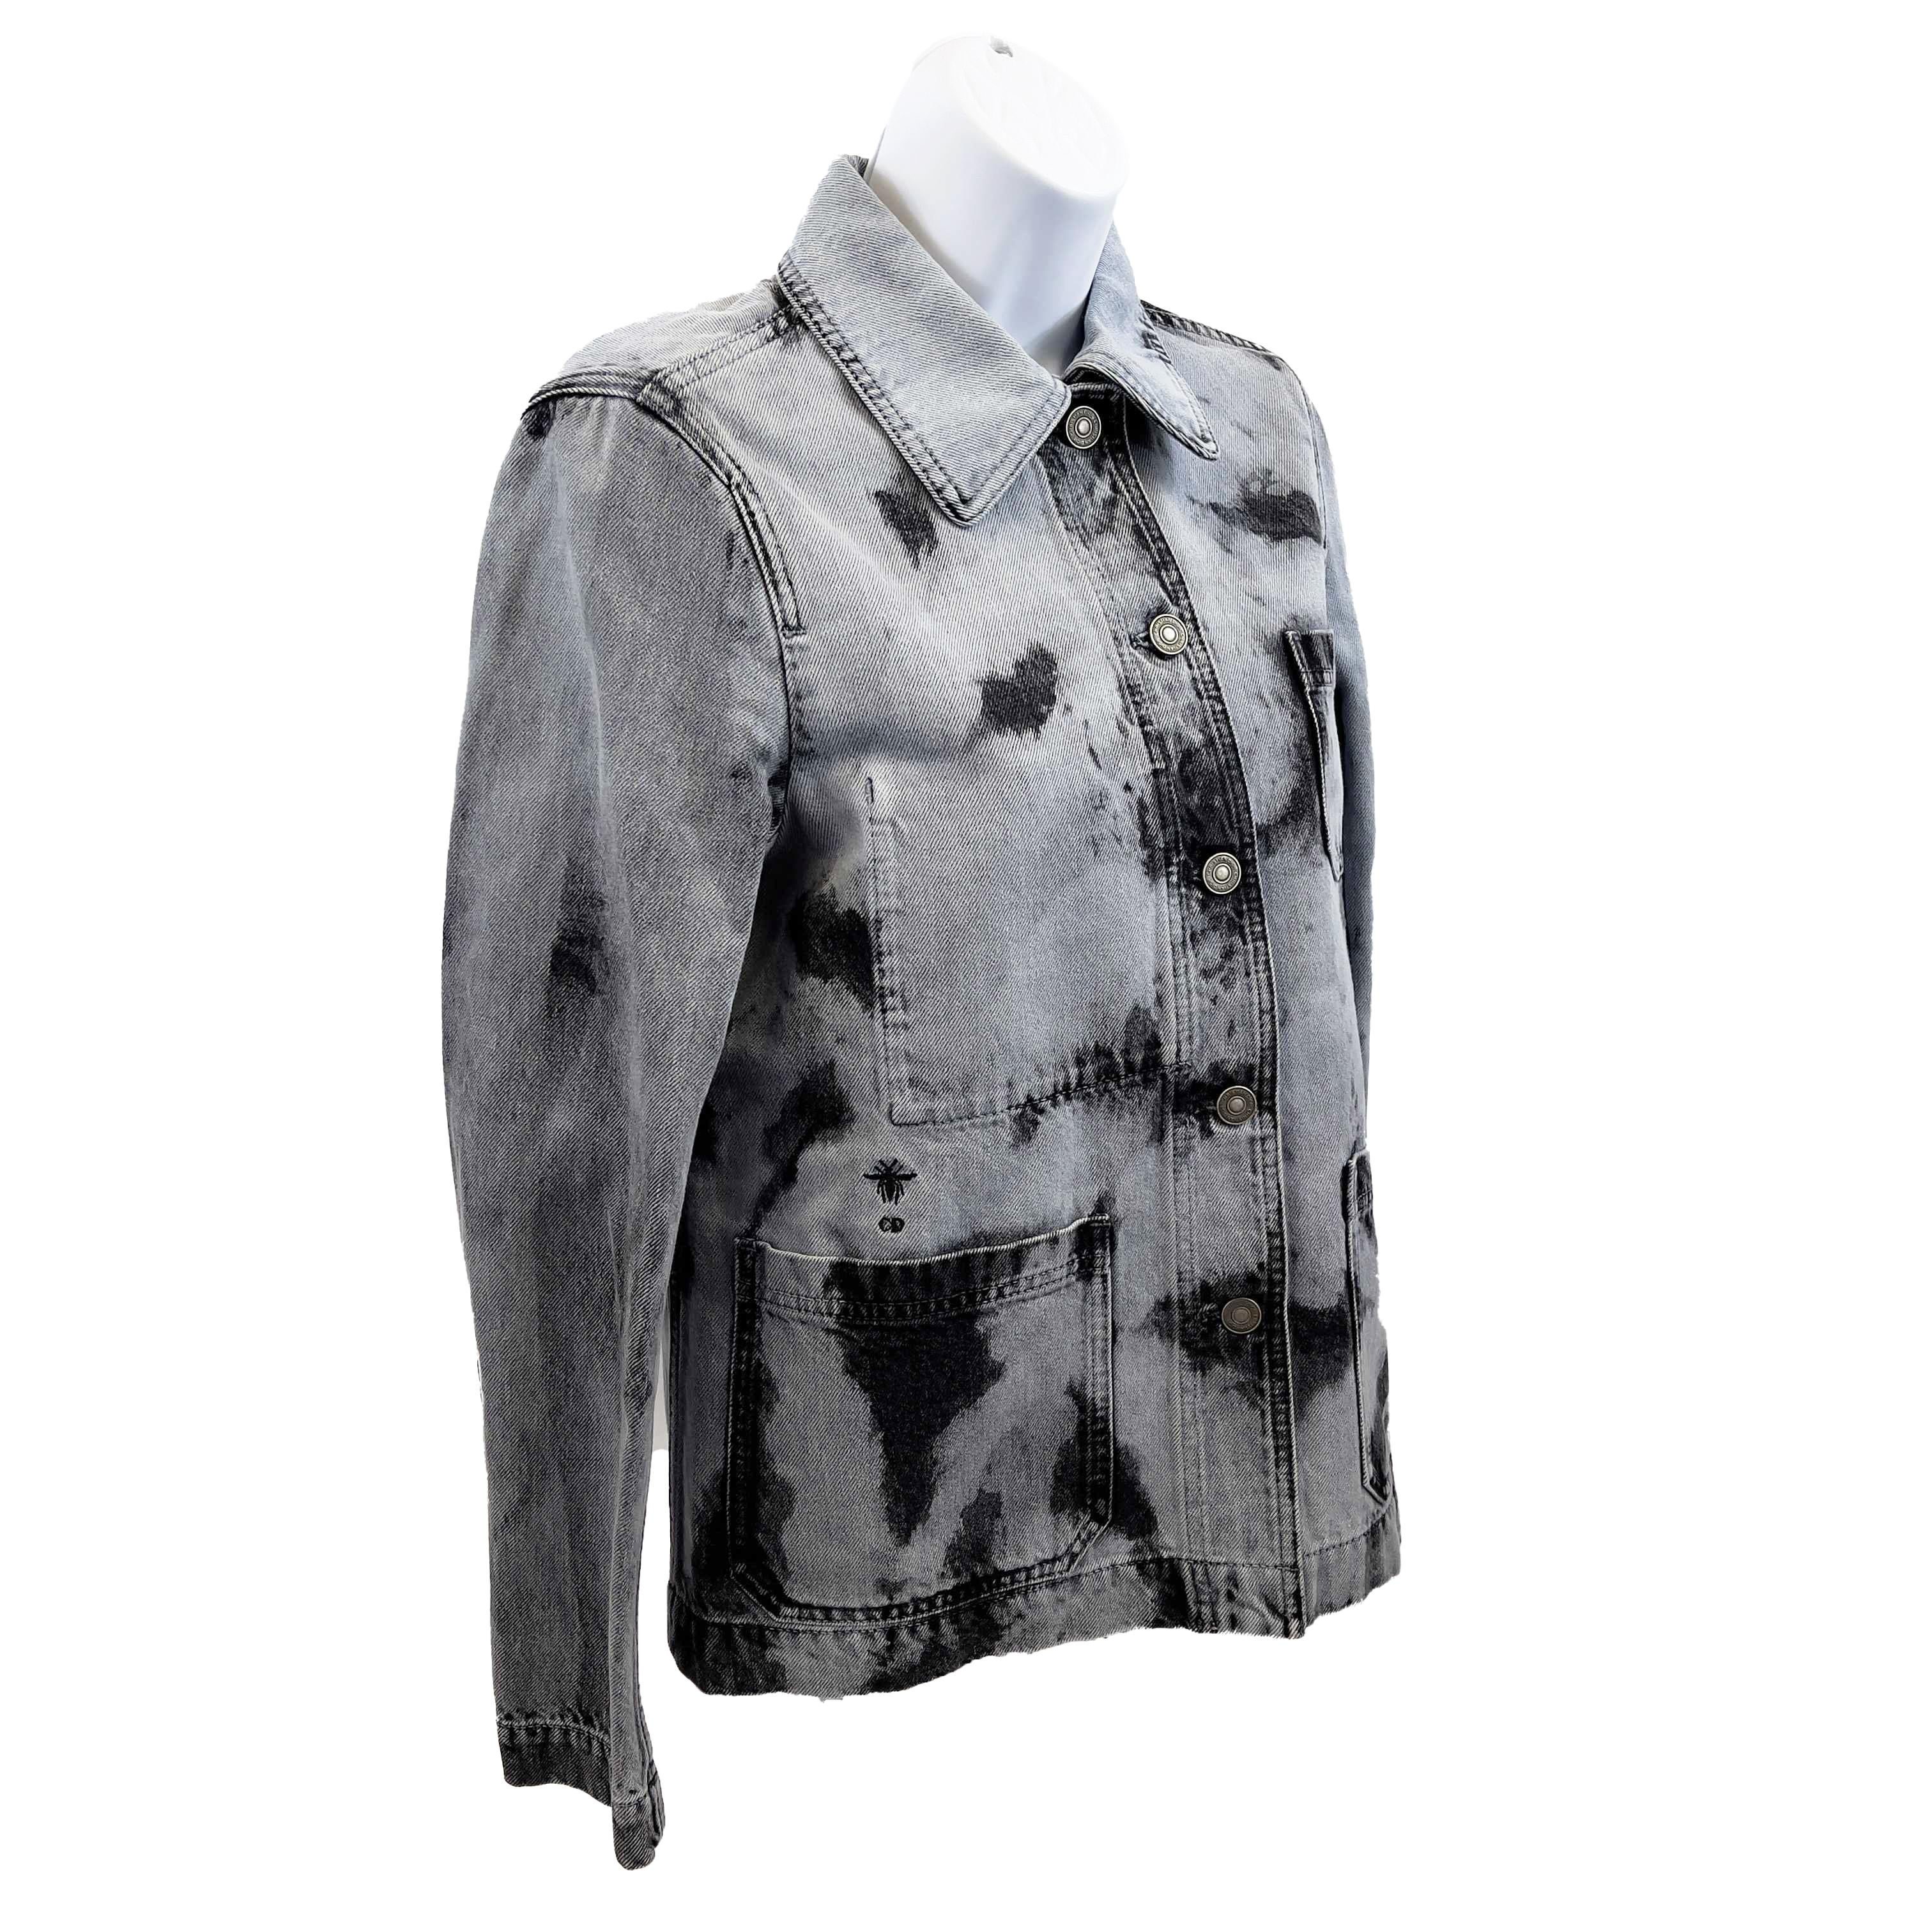 Christian Dior SS 2020 Bleached Denim Jacket Blue / Black S 34 US 2 NWT For Sale 1